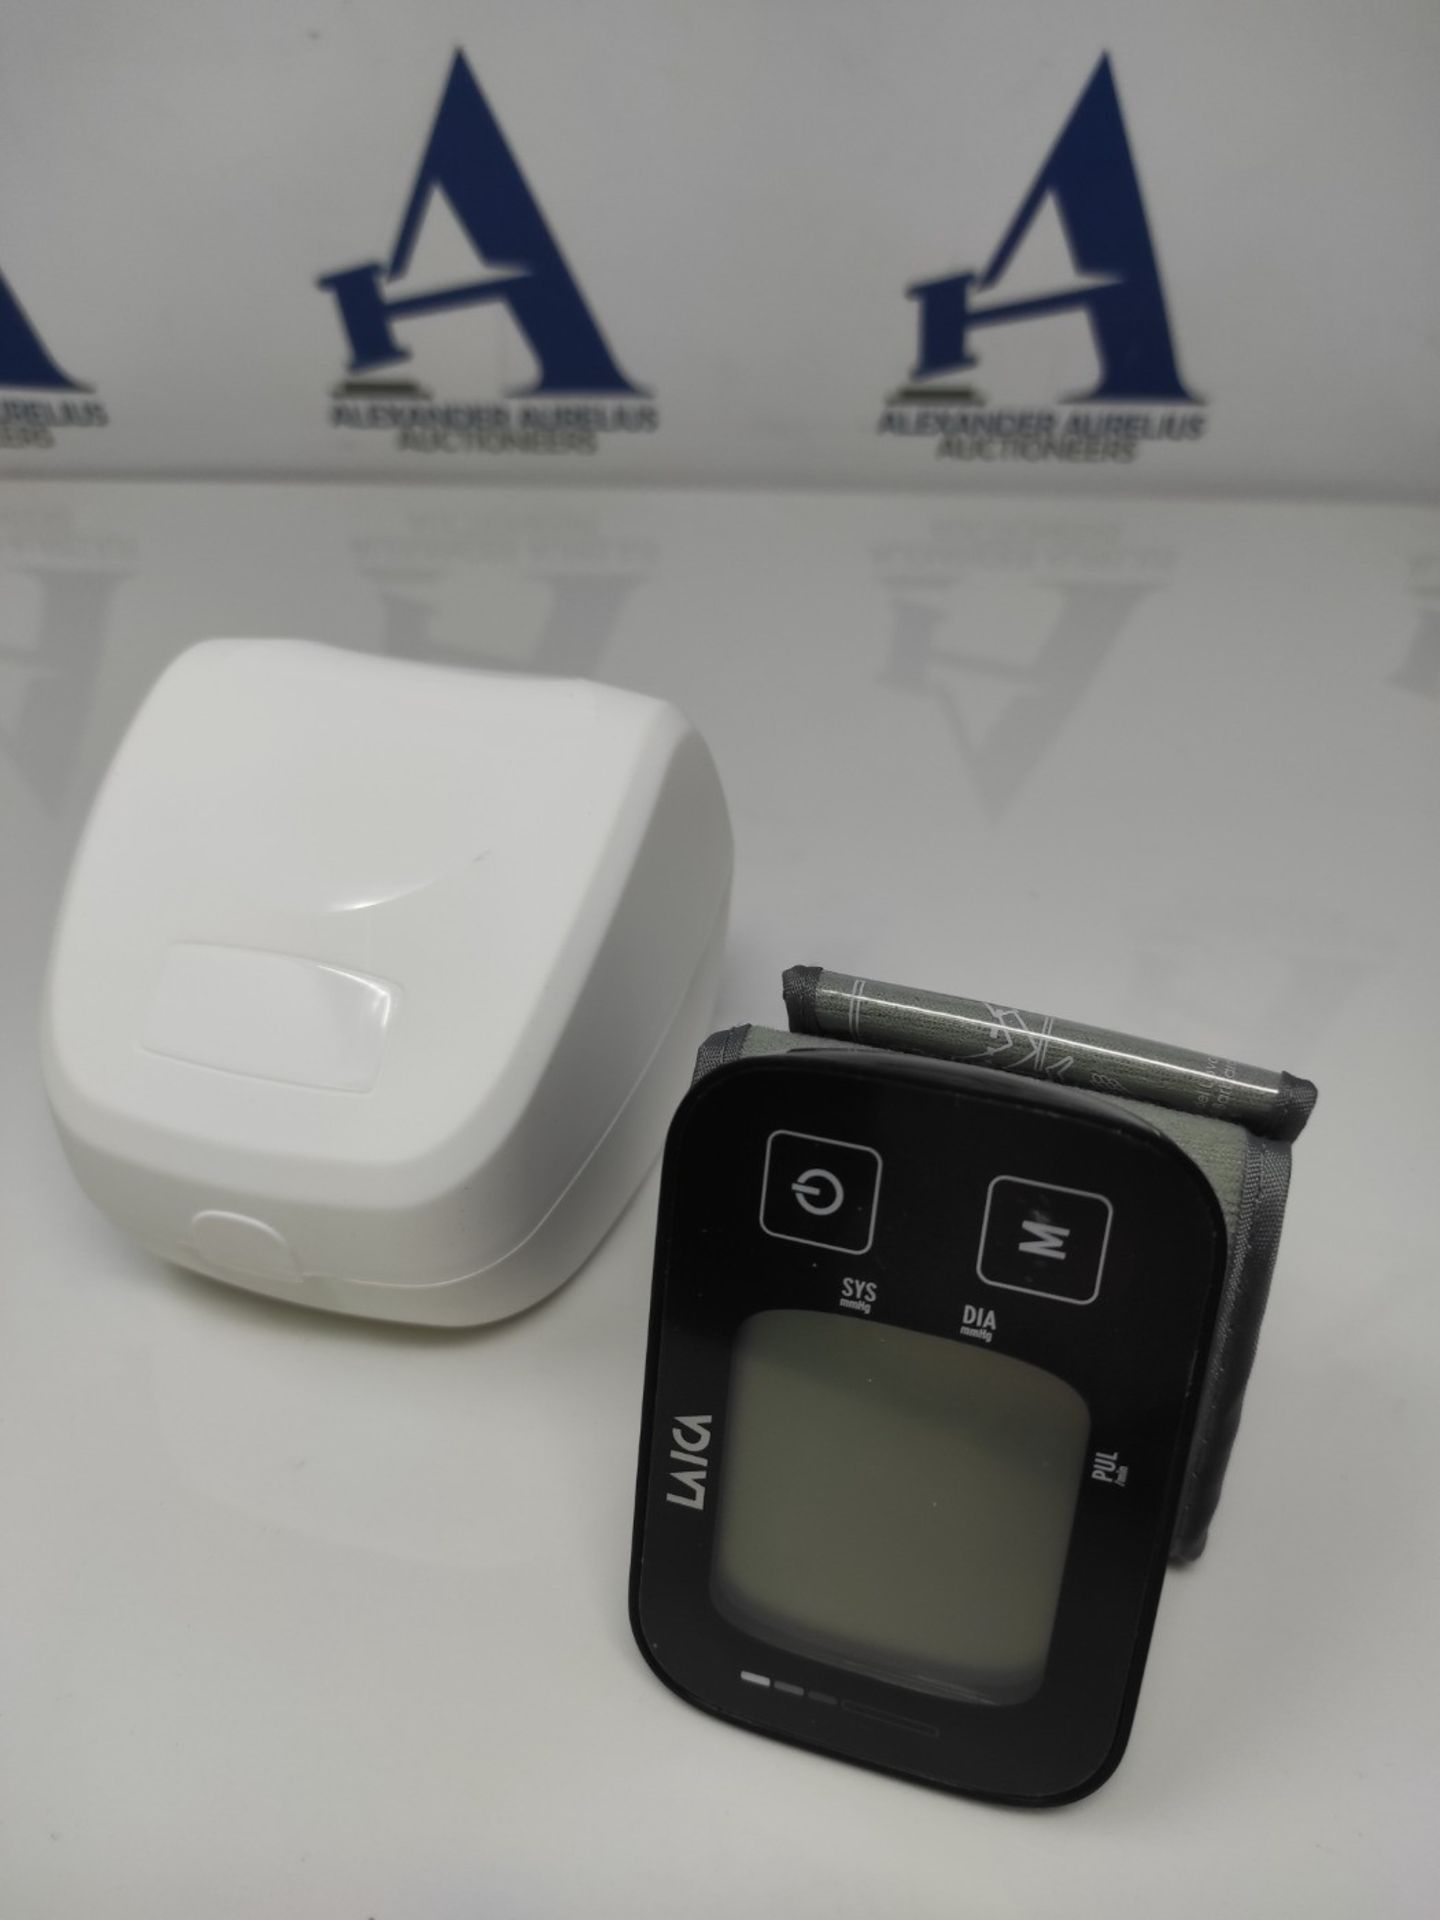 Laica BM1007 Wrist Blood Pressure Monitor - Image 3 of 3